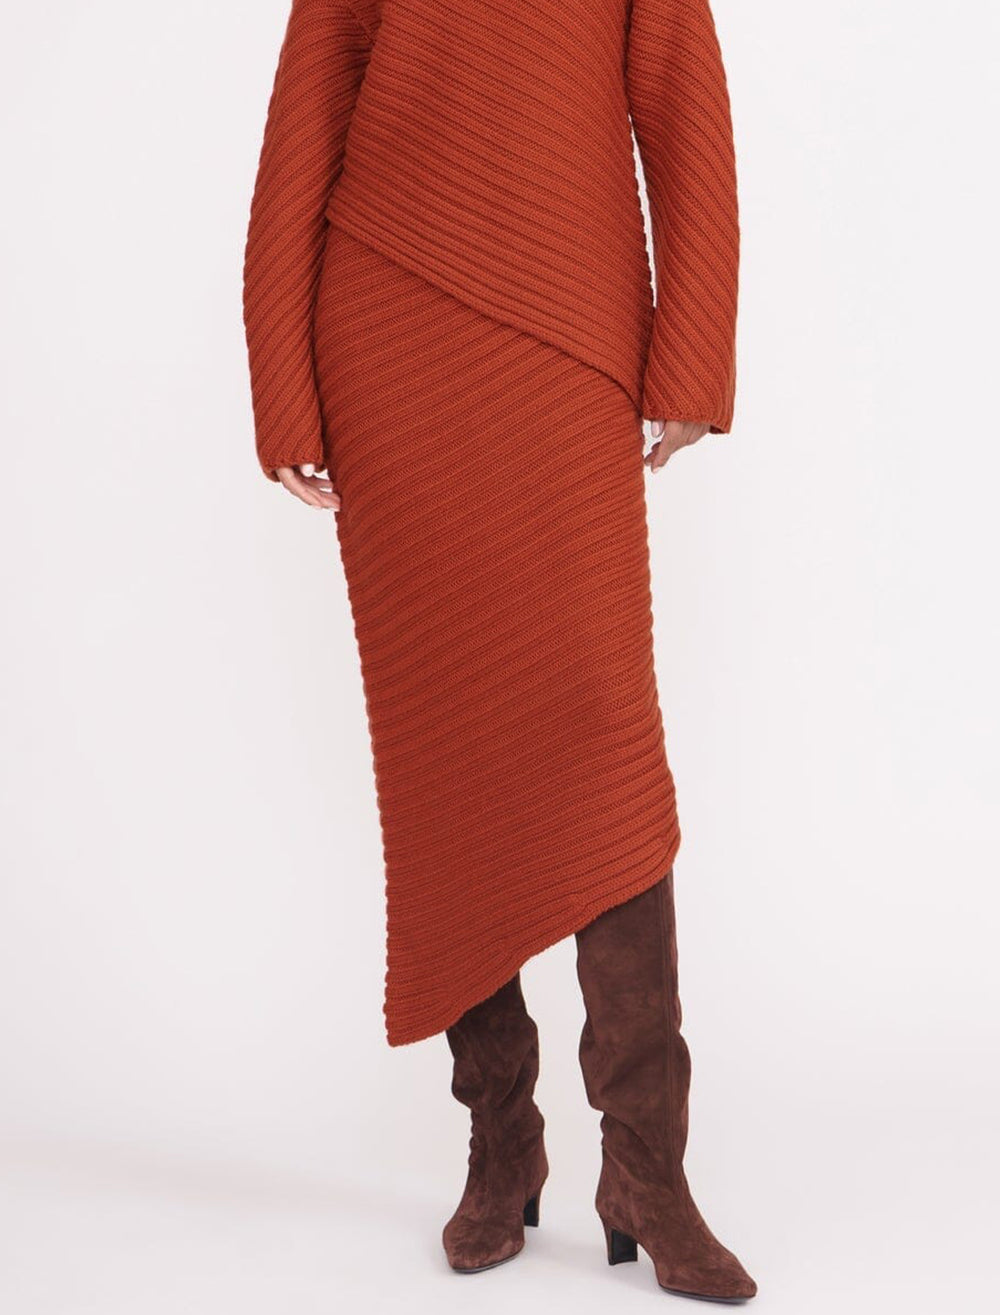 Model wearing STAUD's cantilever skirt in cinnamon.